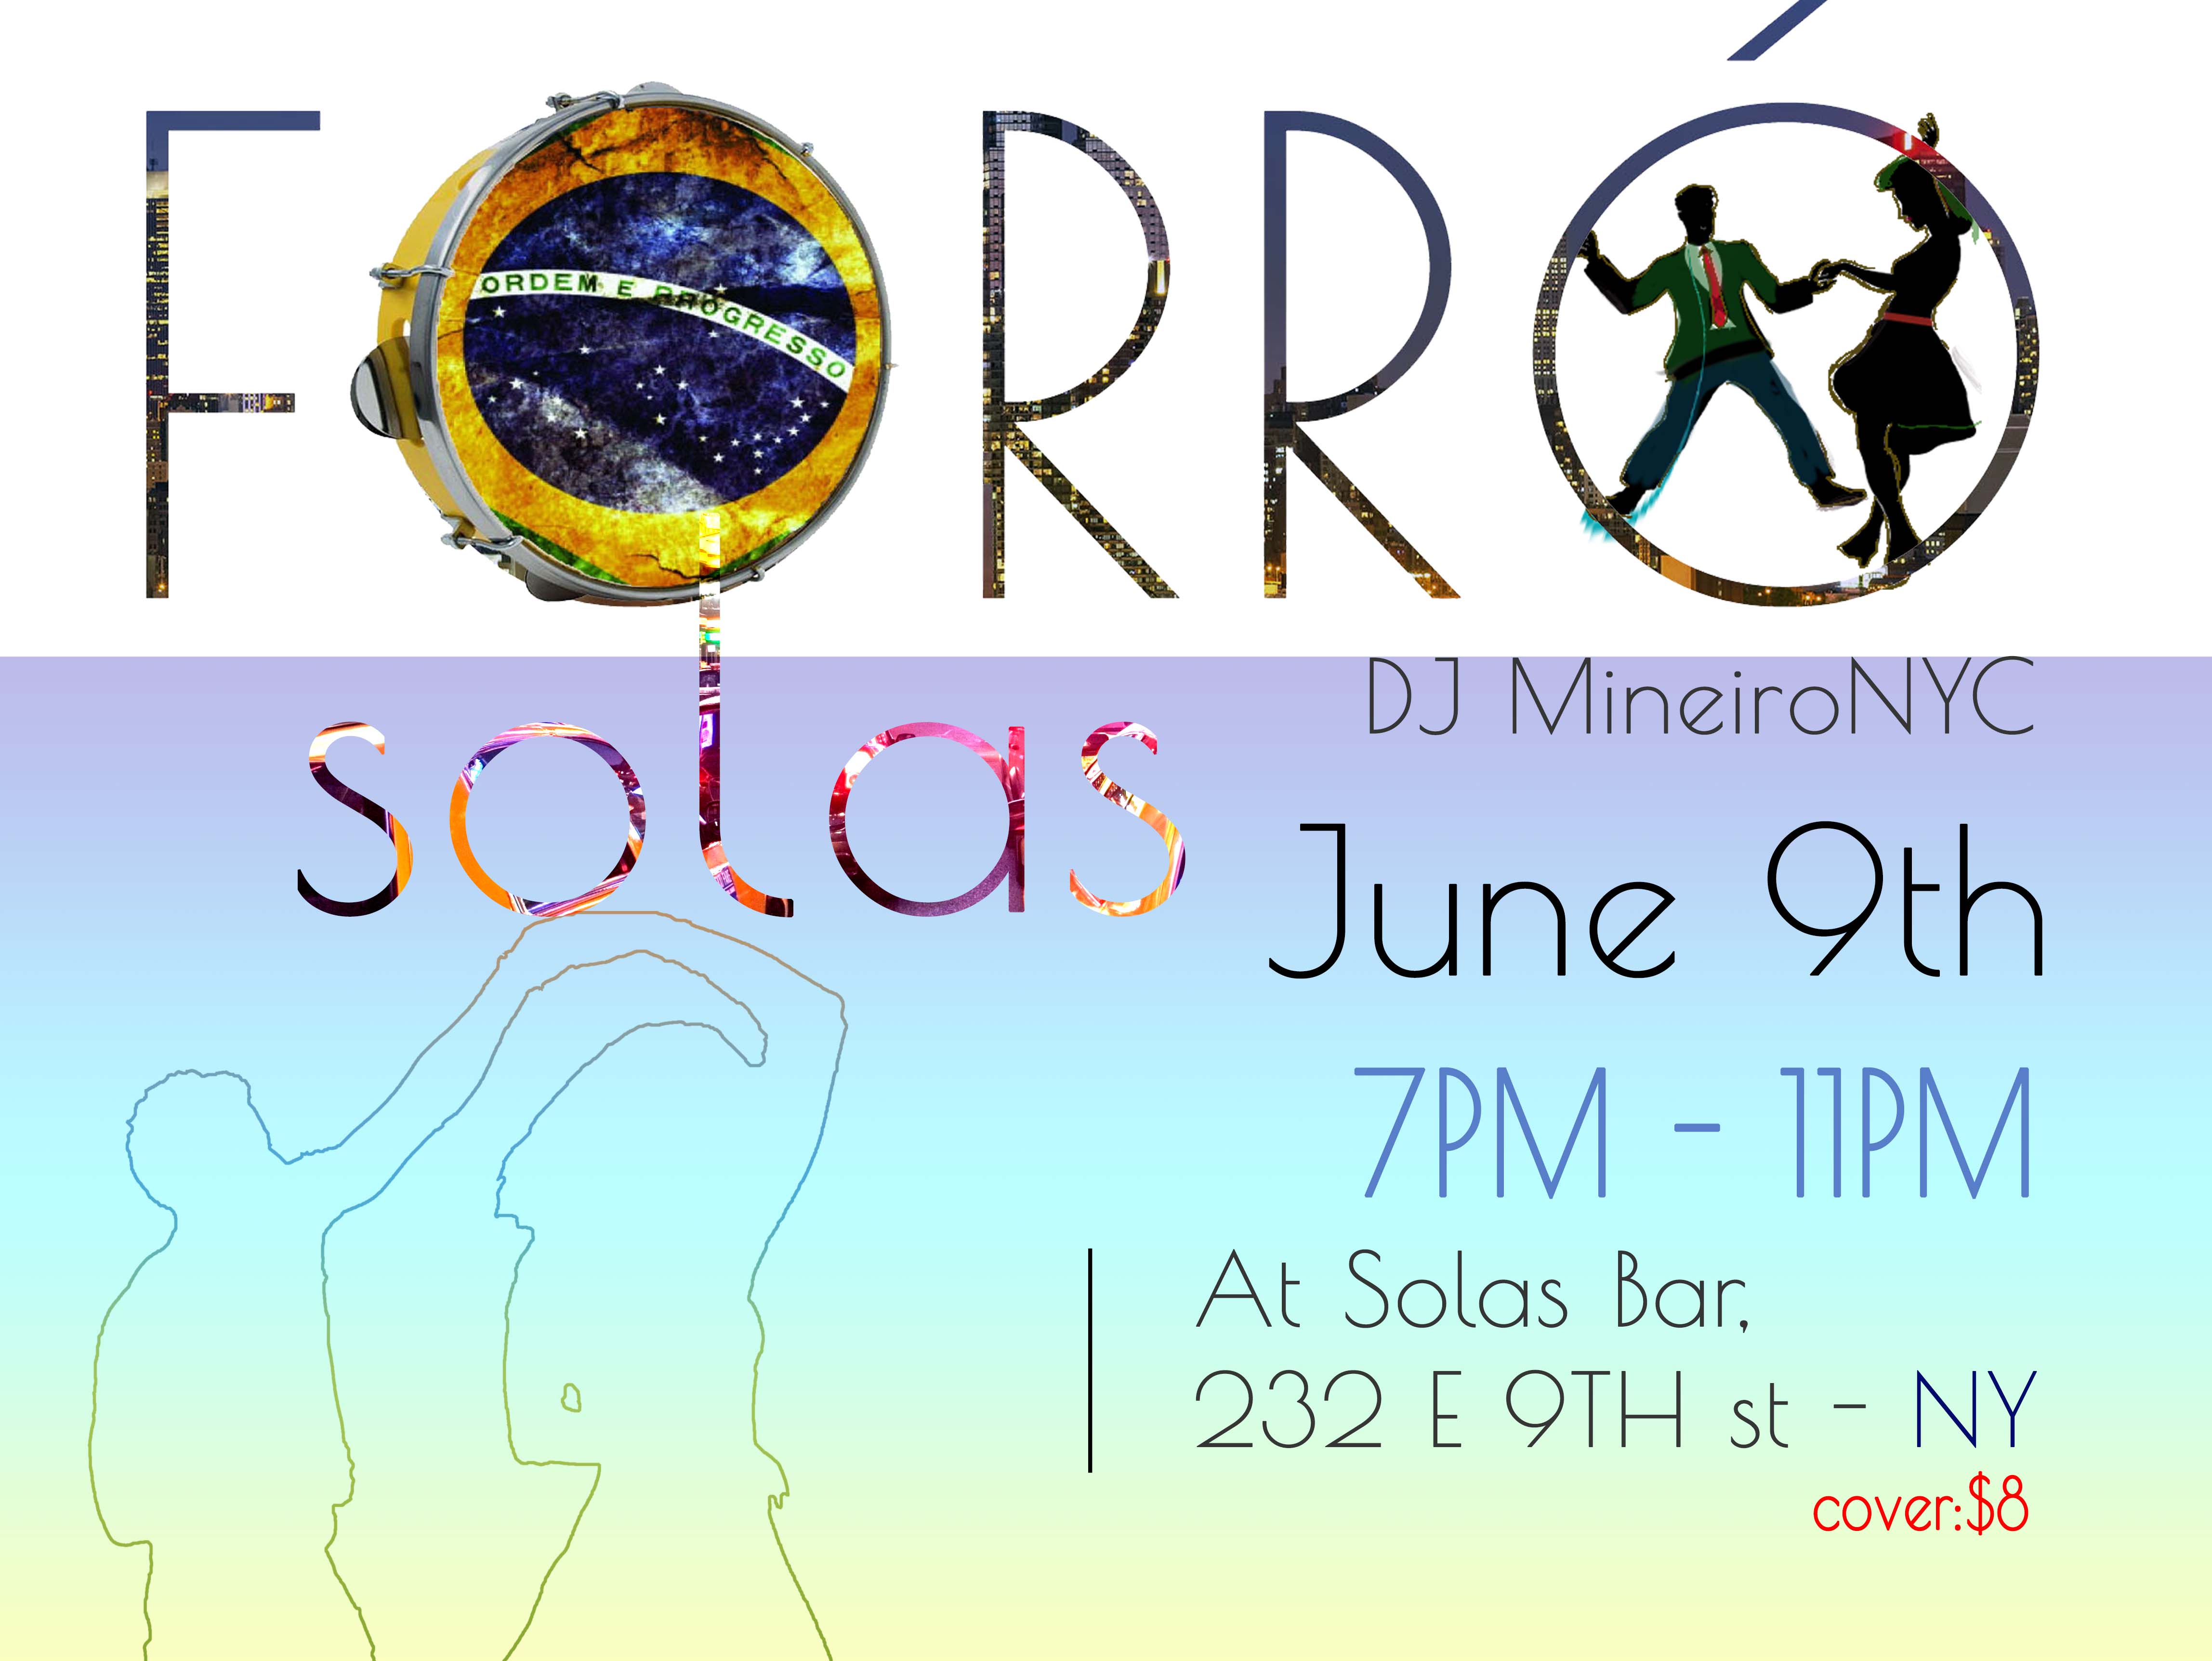 Forró Solas, Sunday June 9, 7pm - 11pm with DJ MineiroNYC at Solas Bar NYC